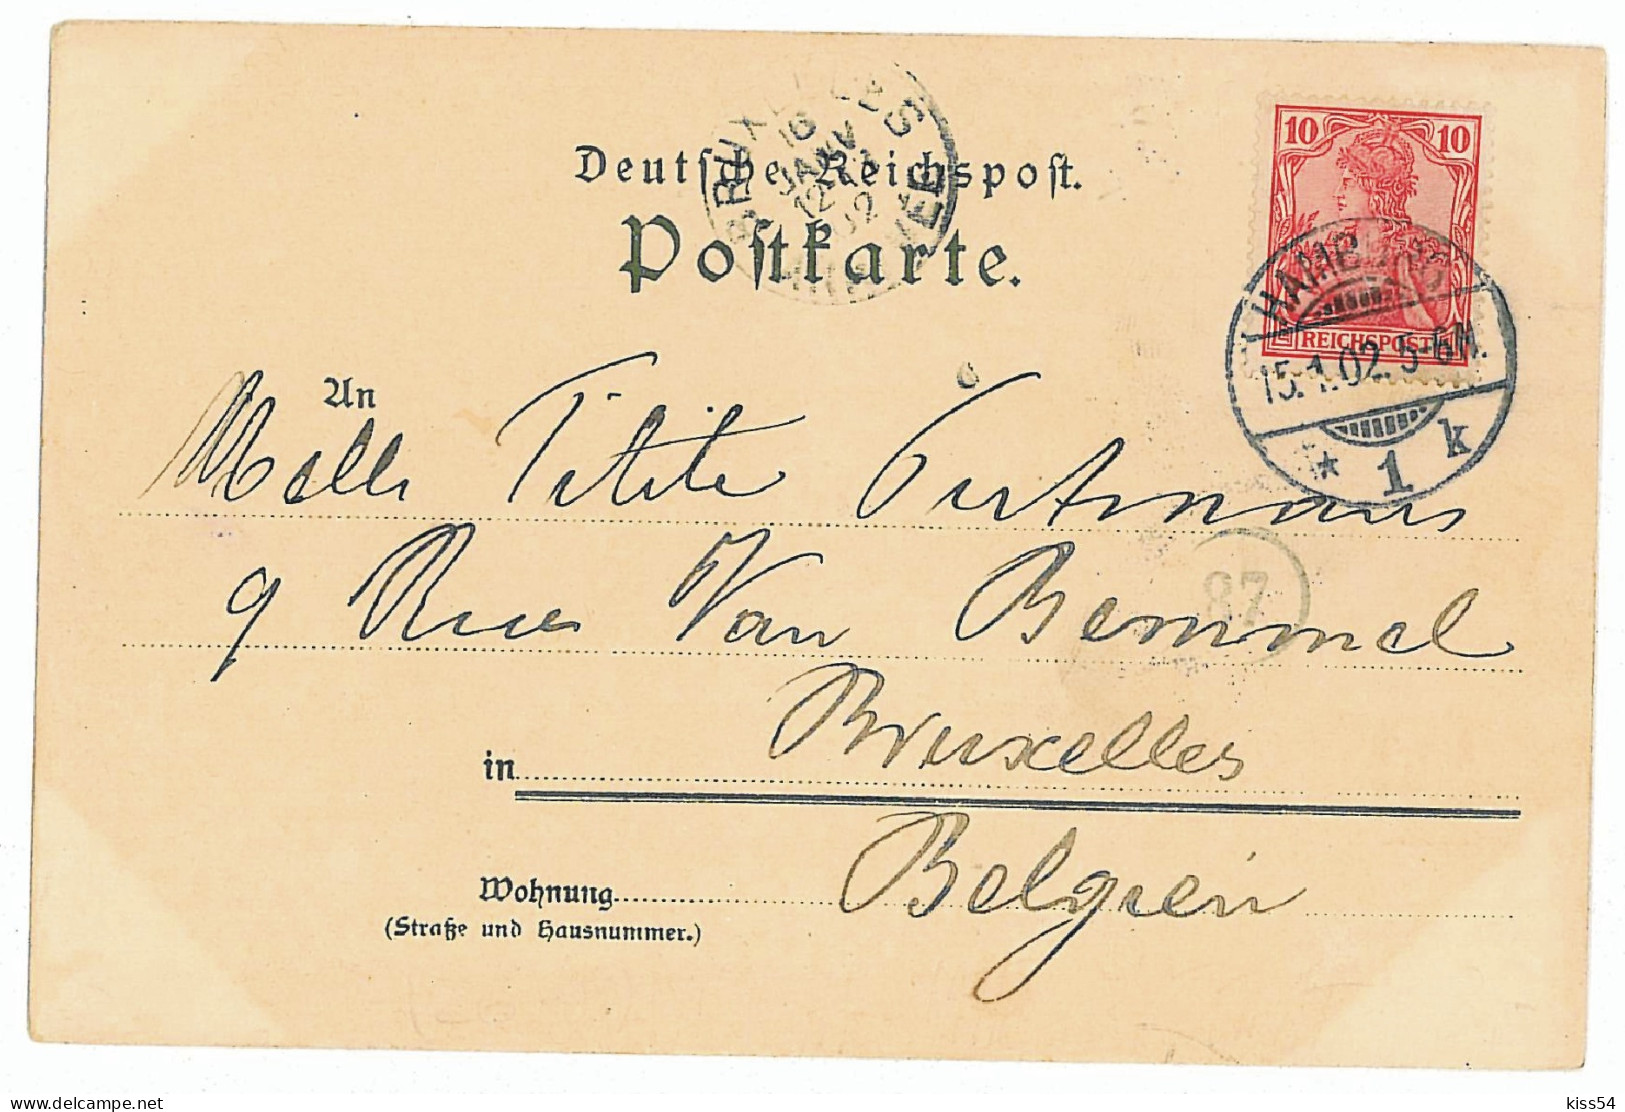 GER 06 - 5710 HAMBURG, Germany, L I T H O - Old Postcard - Used - 1902 - Harburg